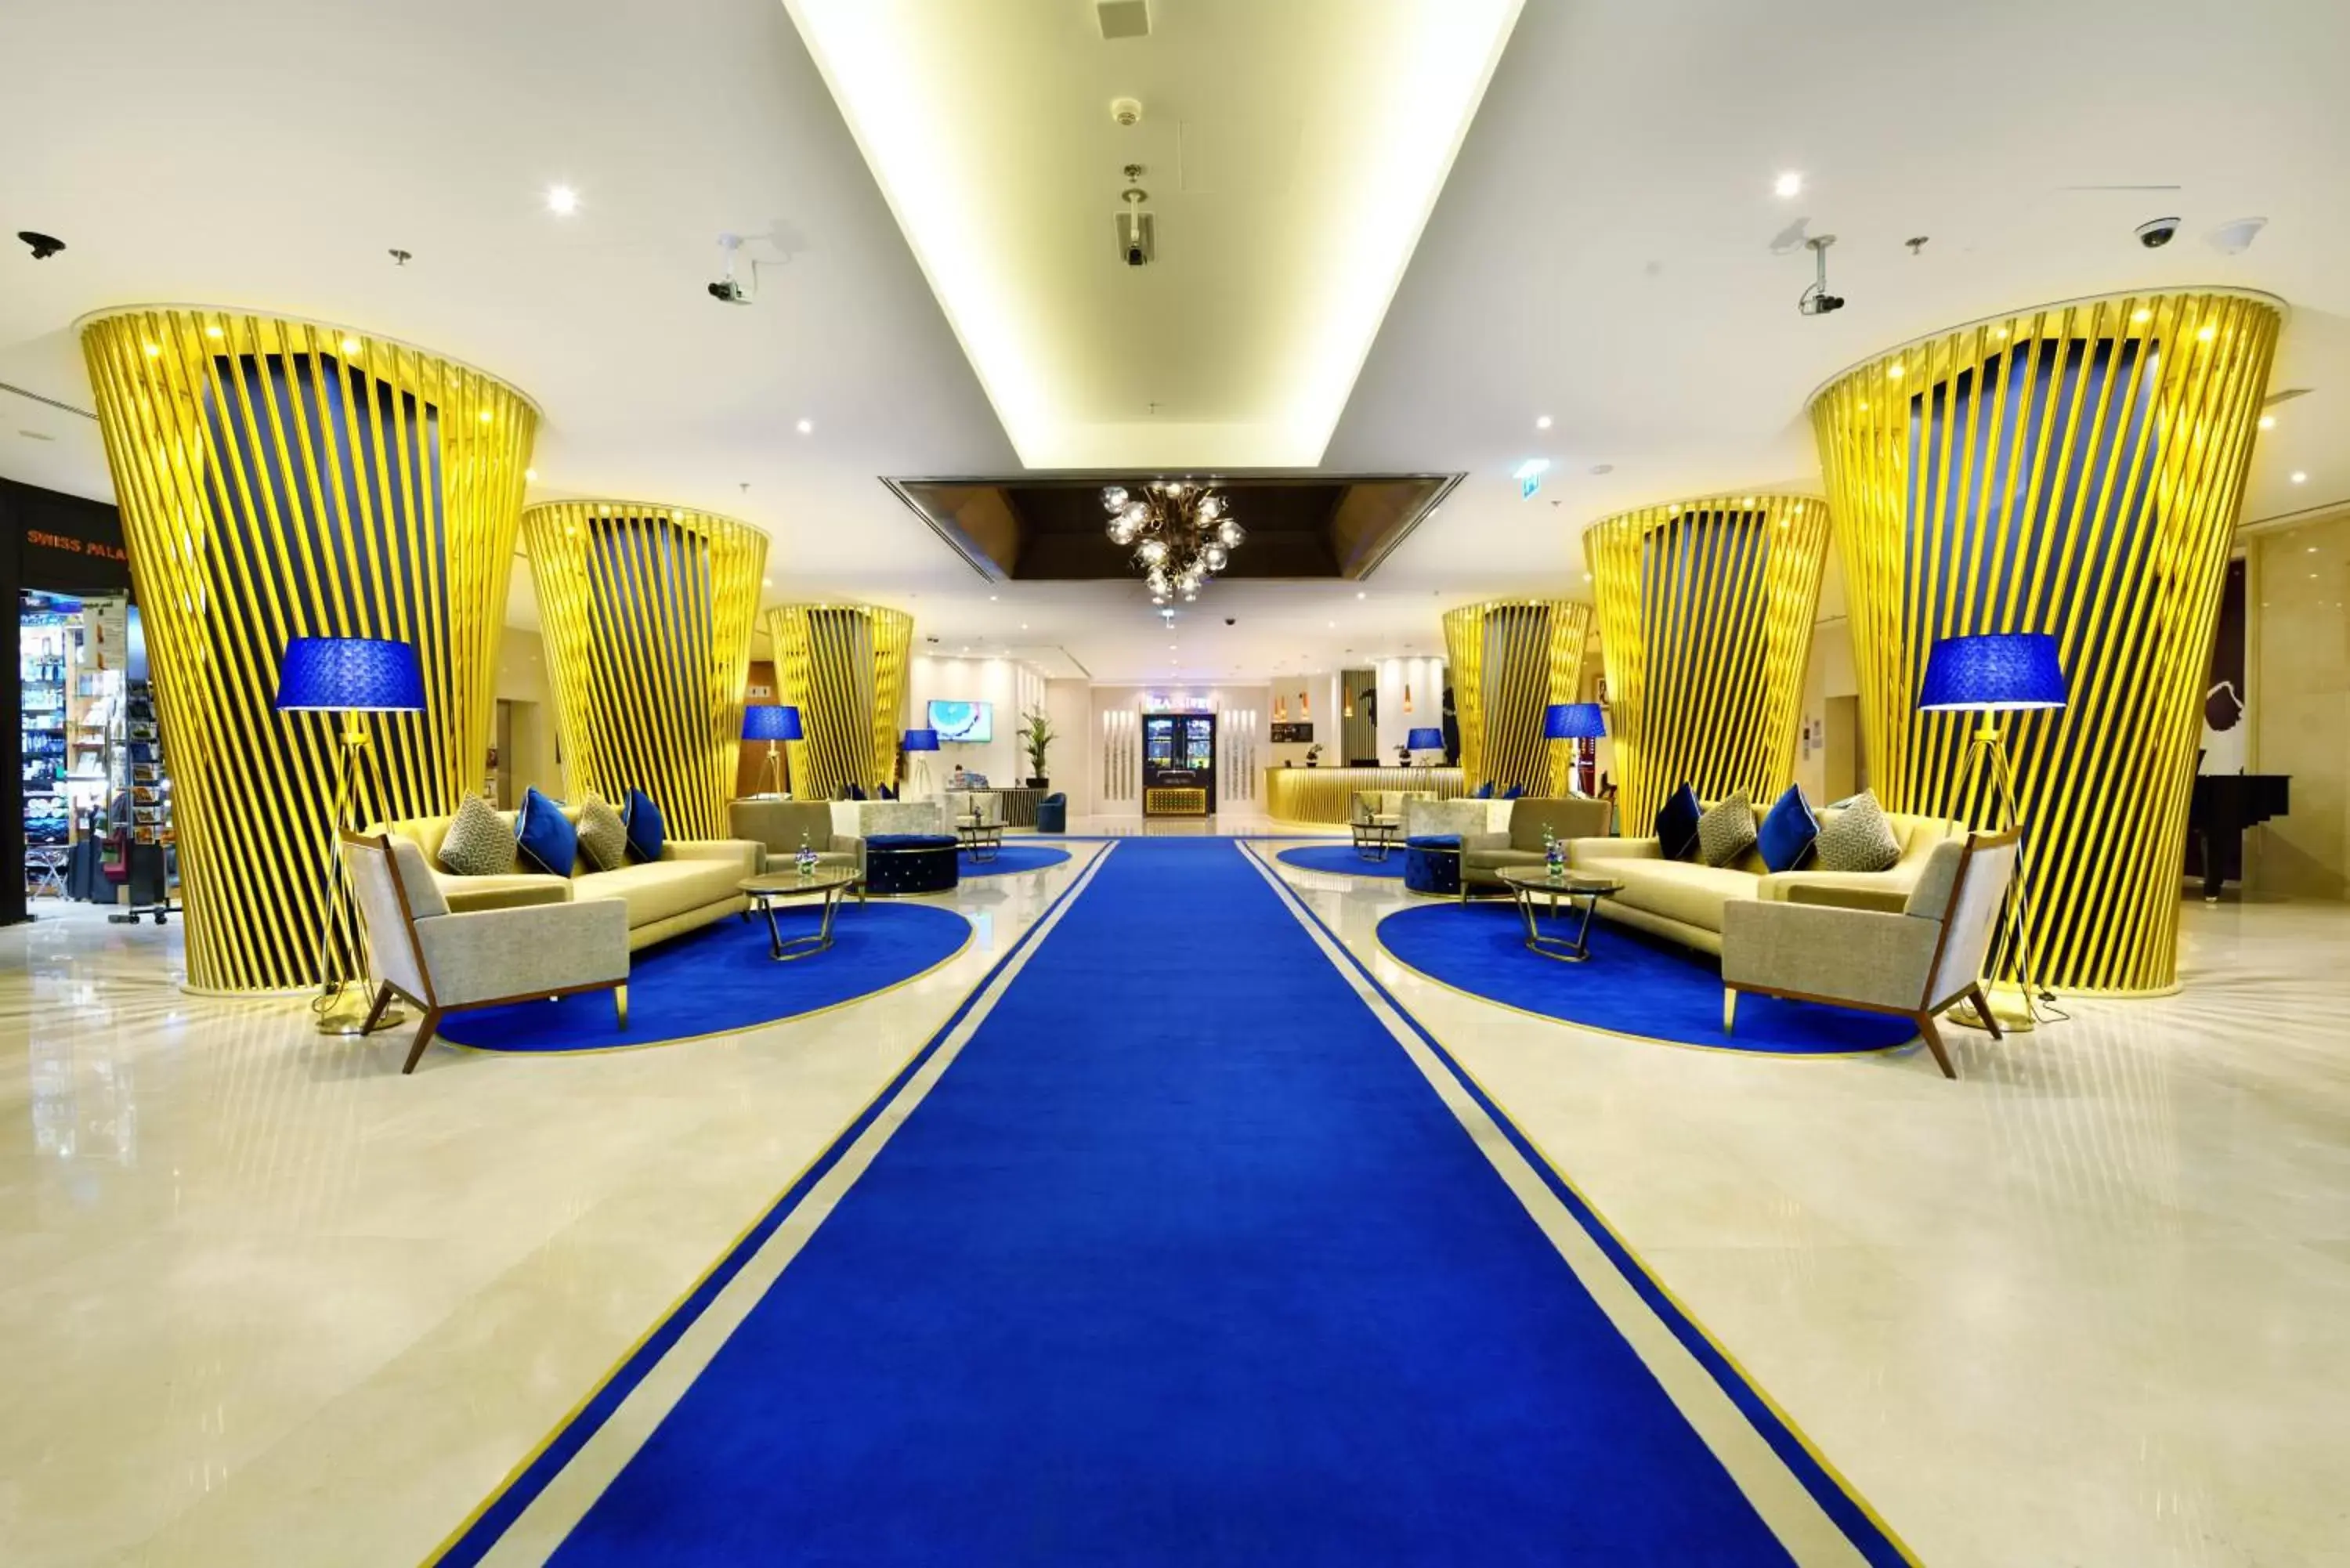 Lobby or reception in Mercure Gold Hotel, Jumeirah, Dubai